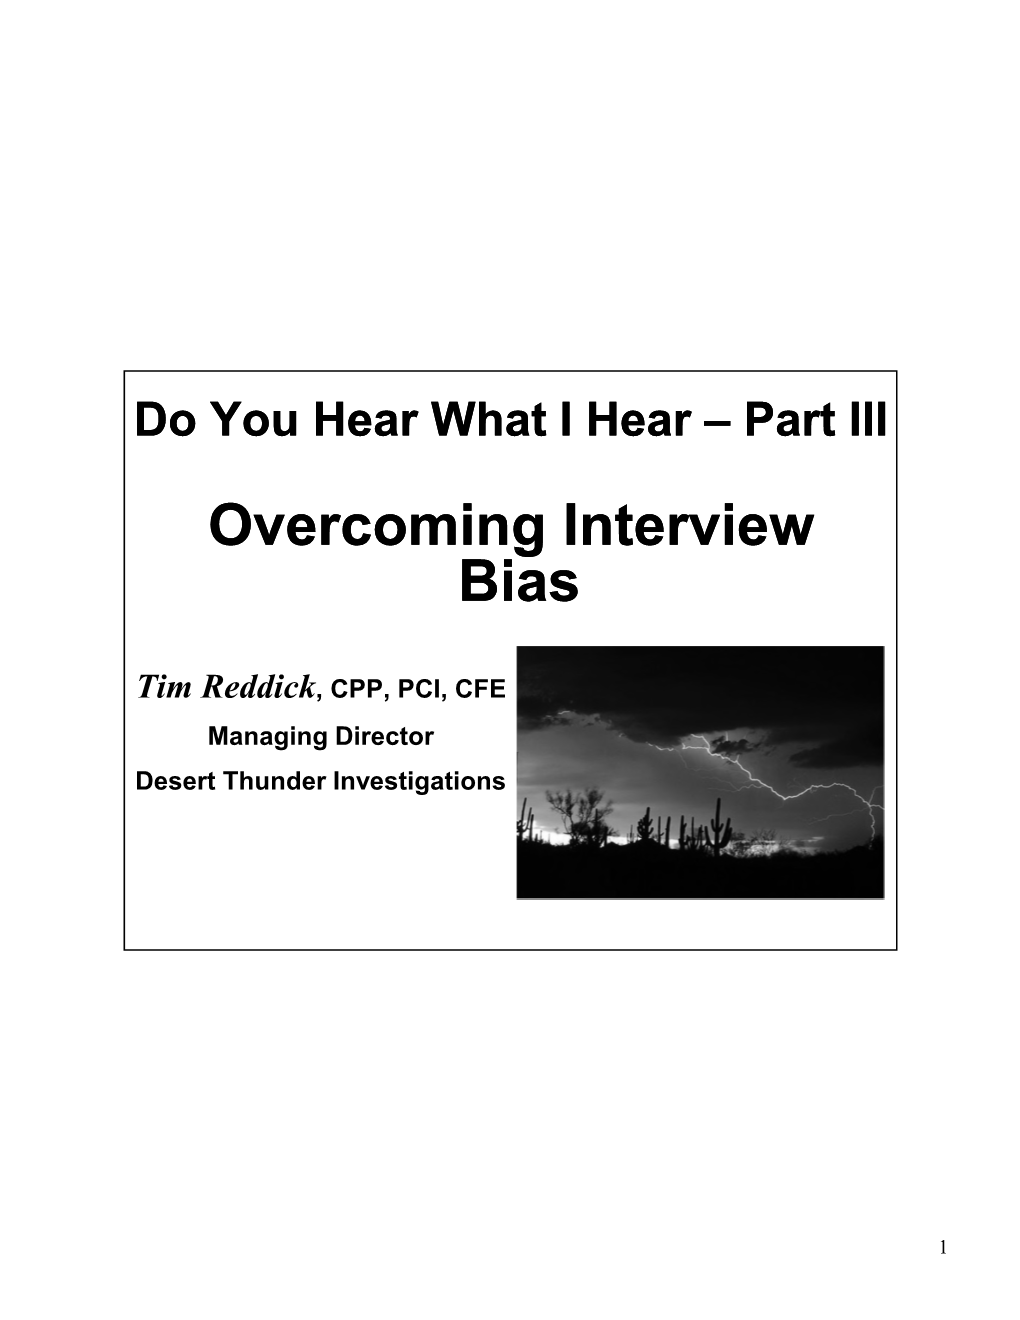 Overcoming Interview Bias